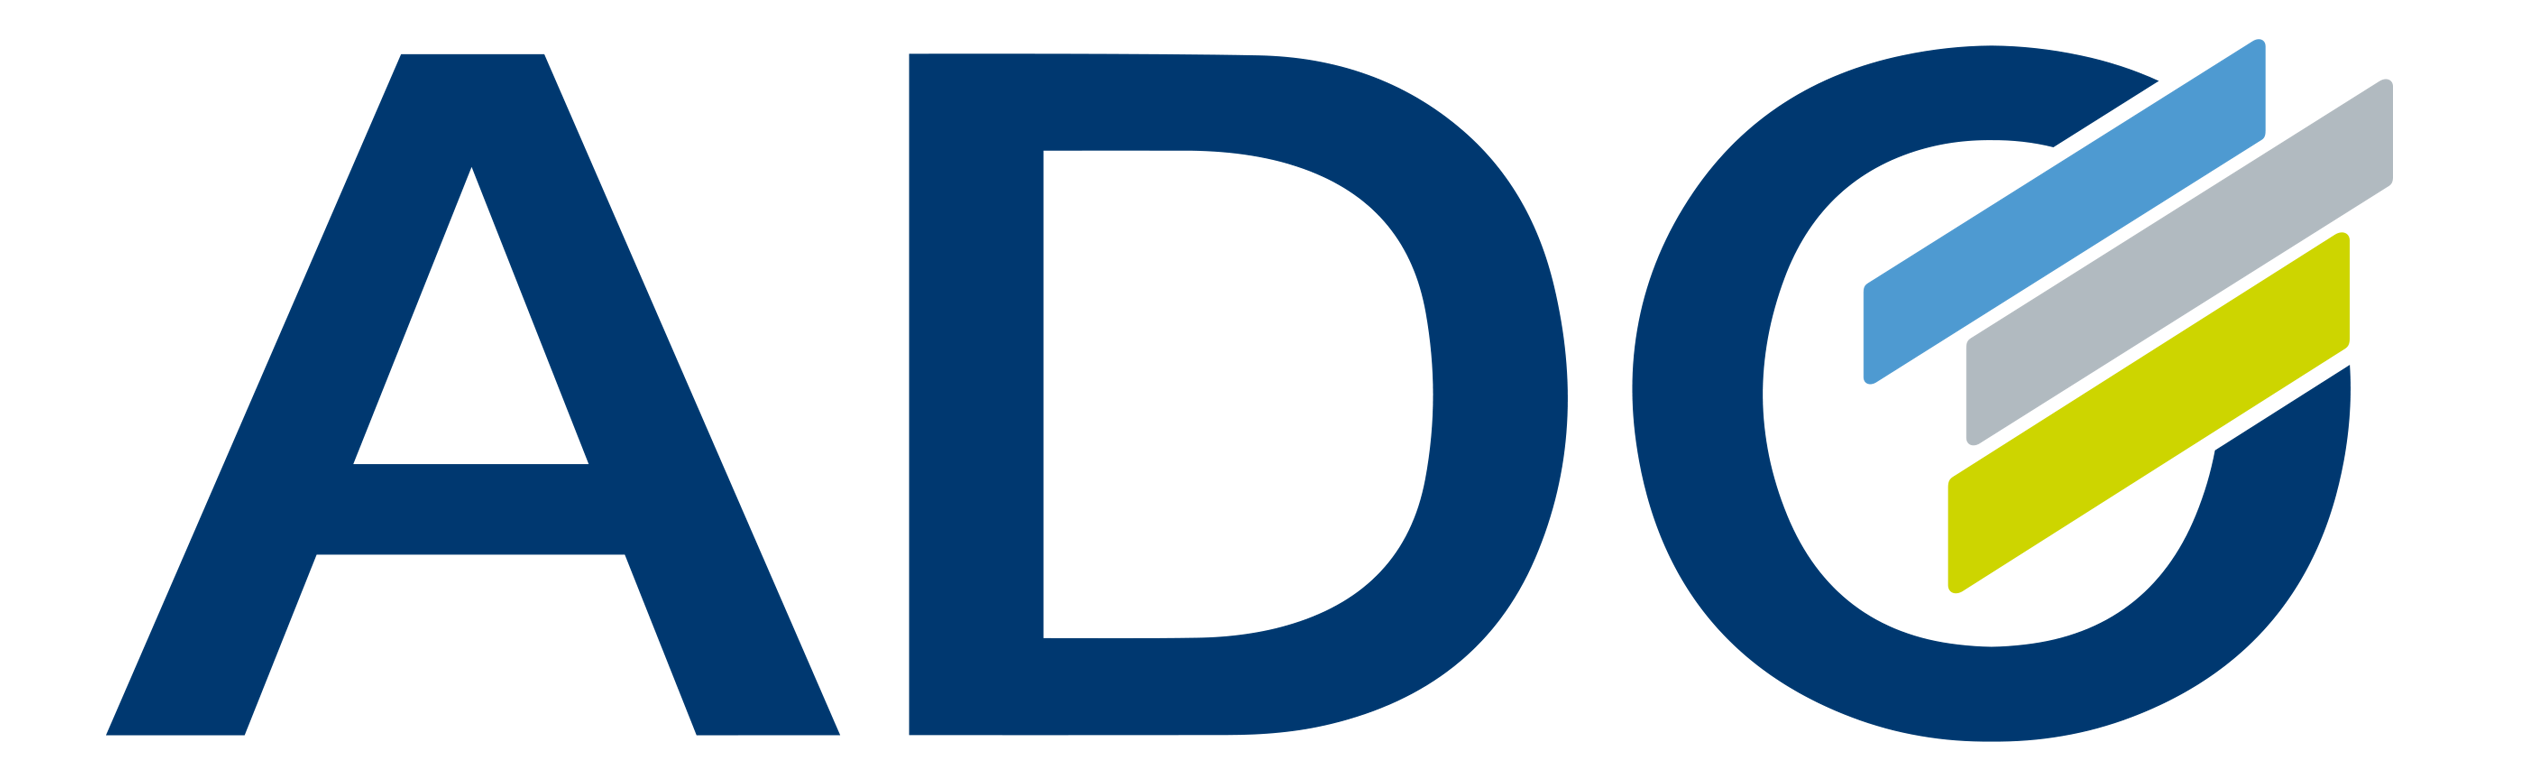 ADO Immobilien Management GmbH